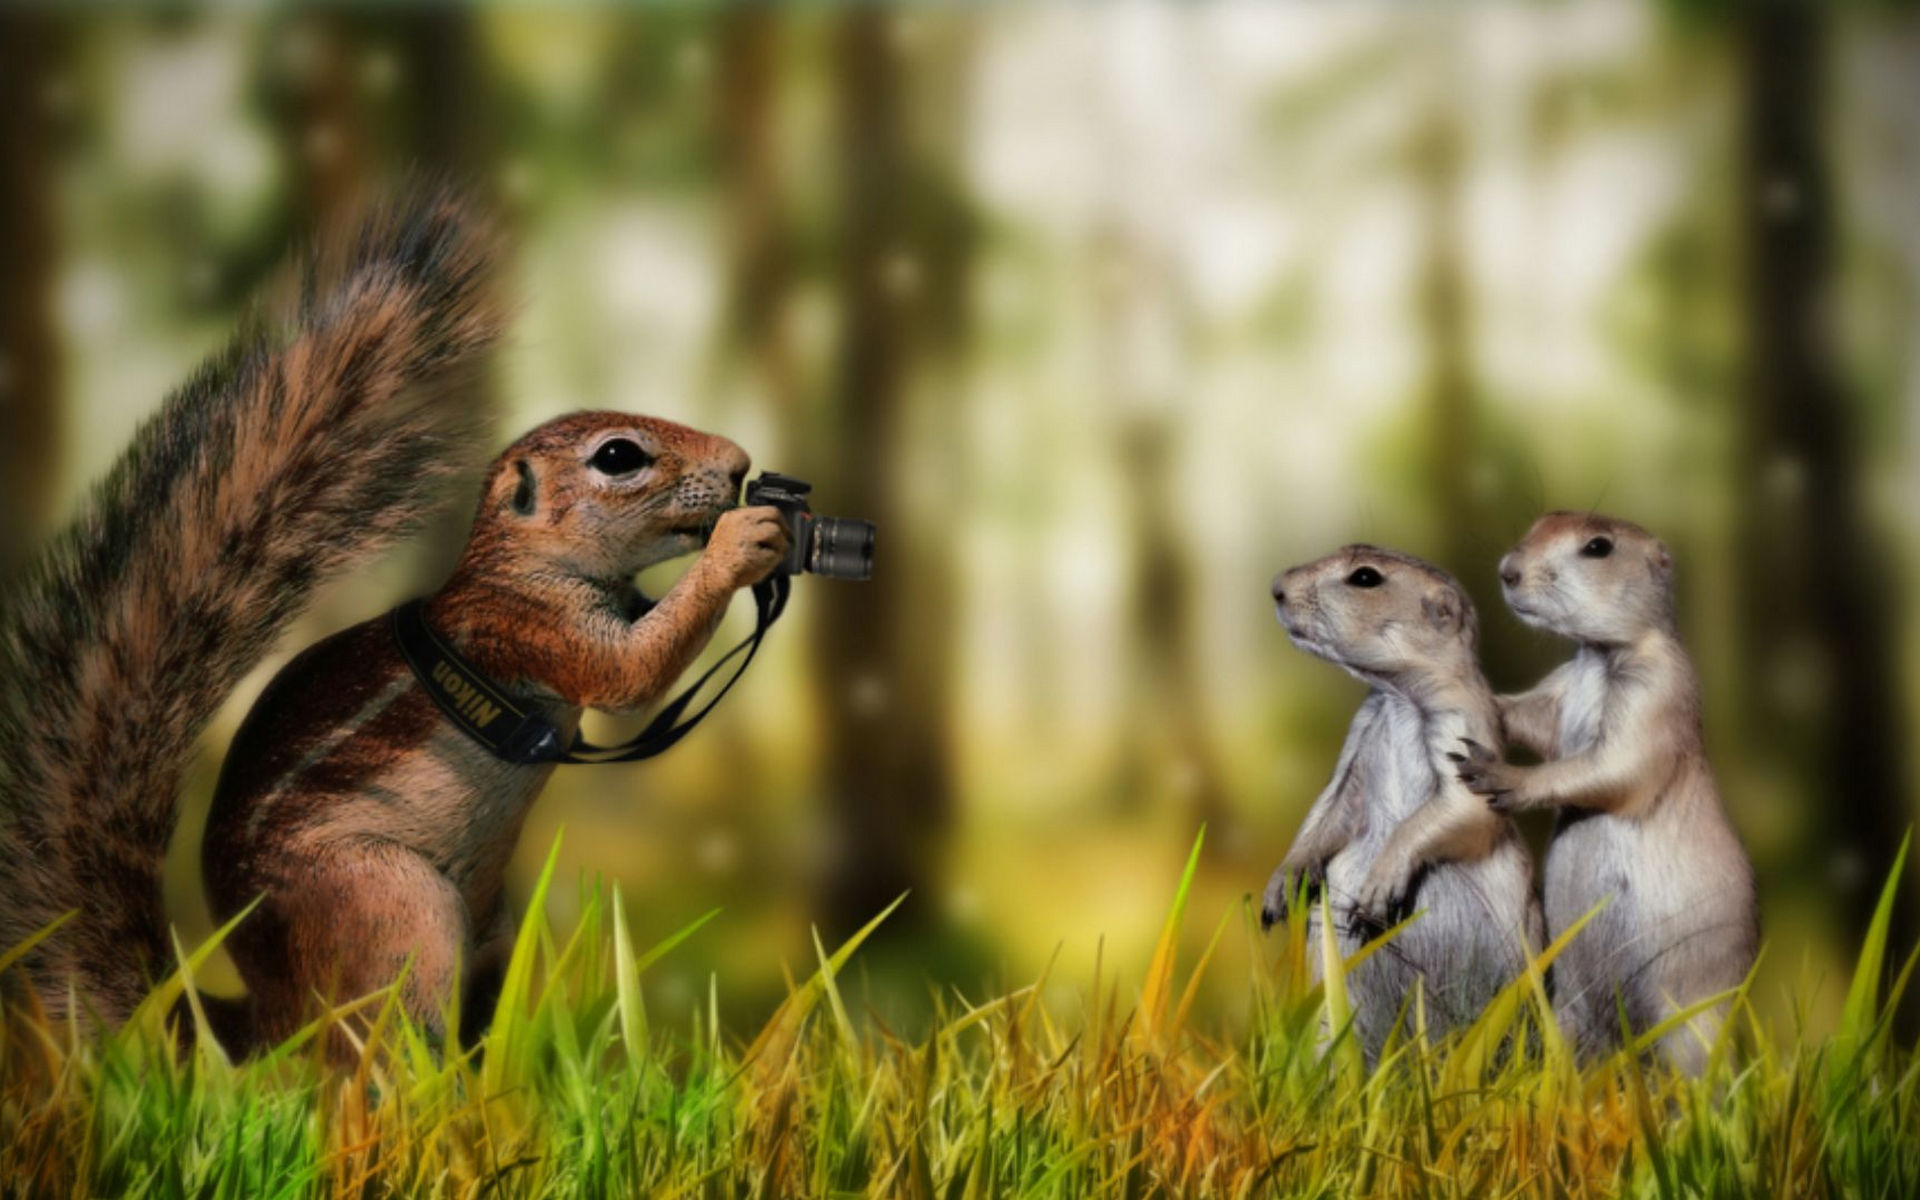 Wallpapers animals gophers squirrel on the desktop